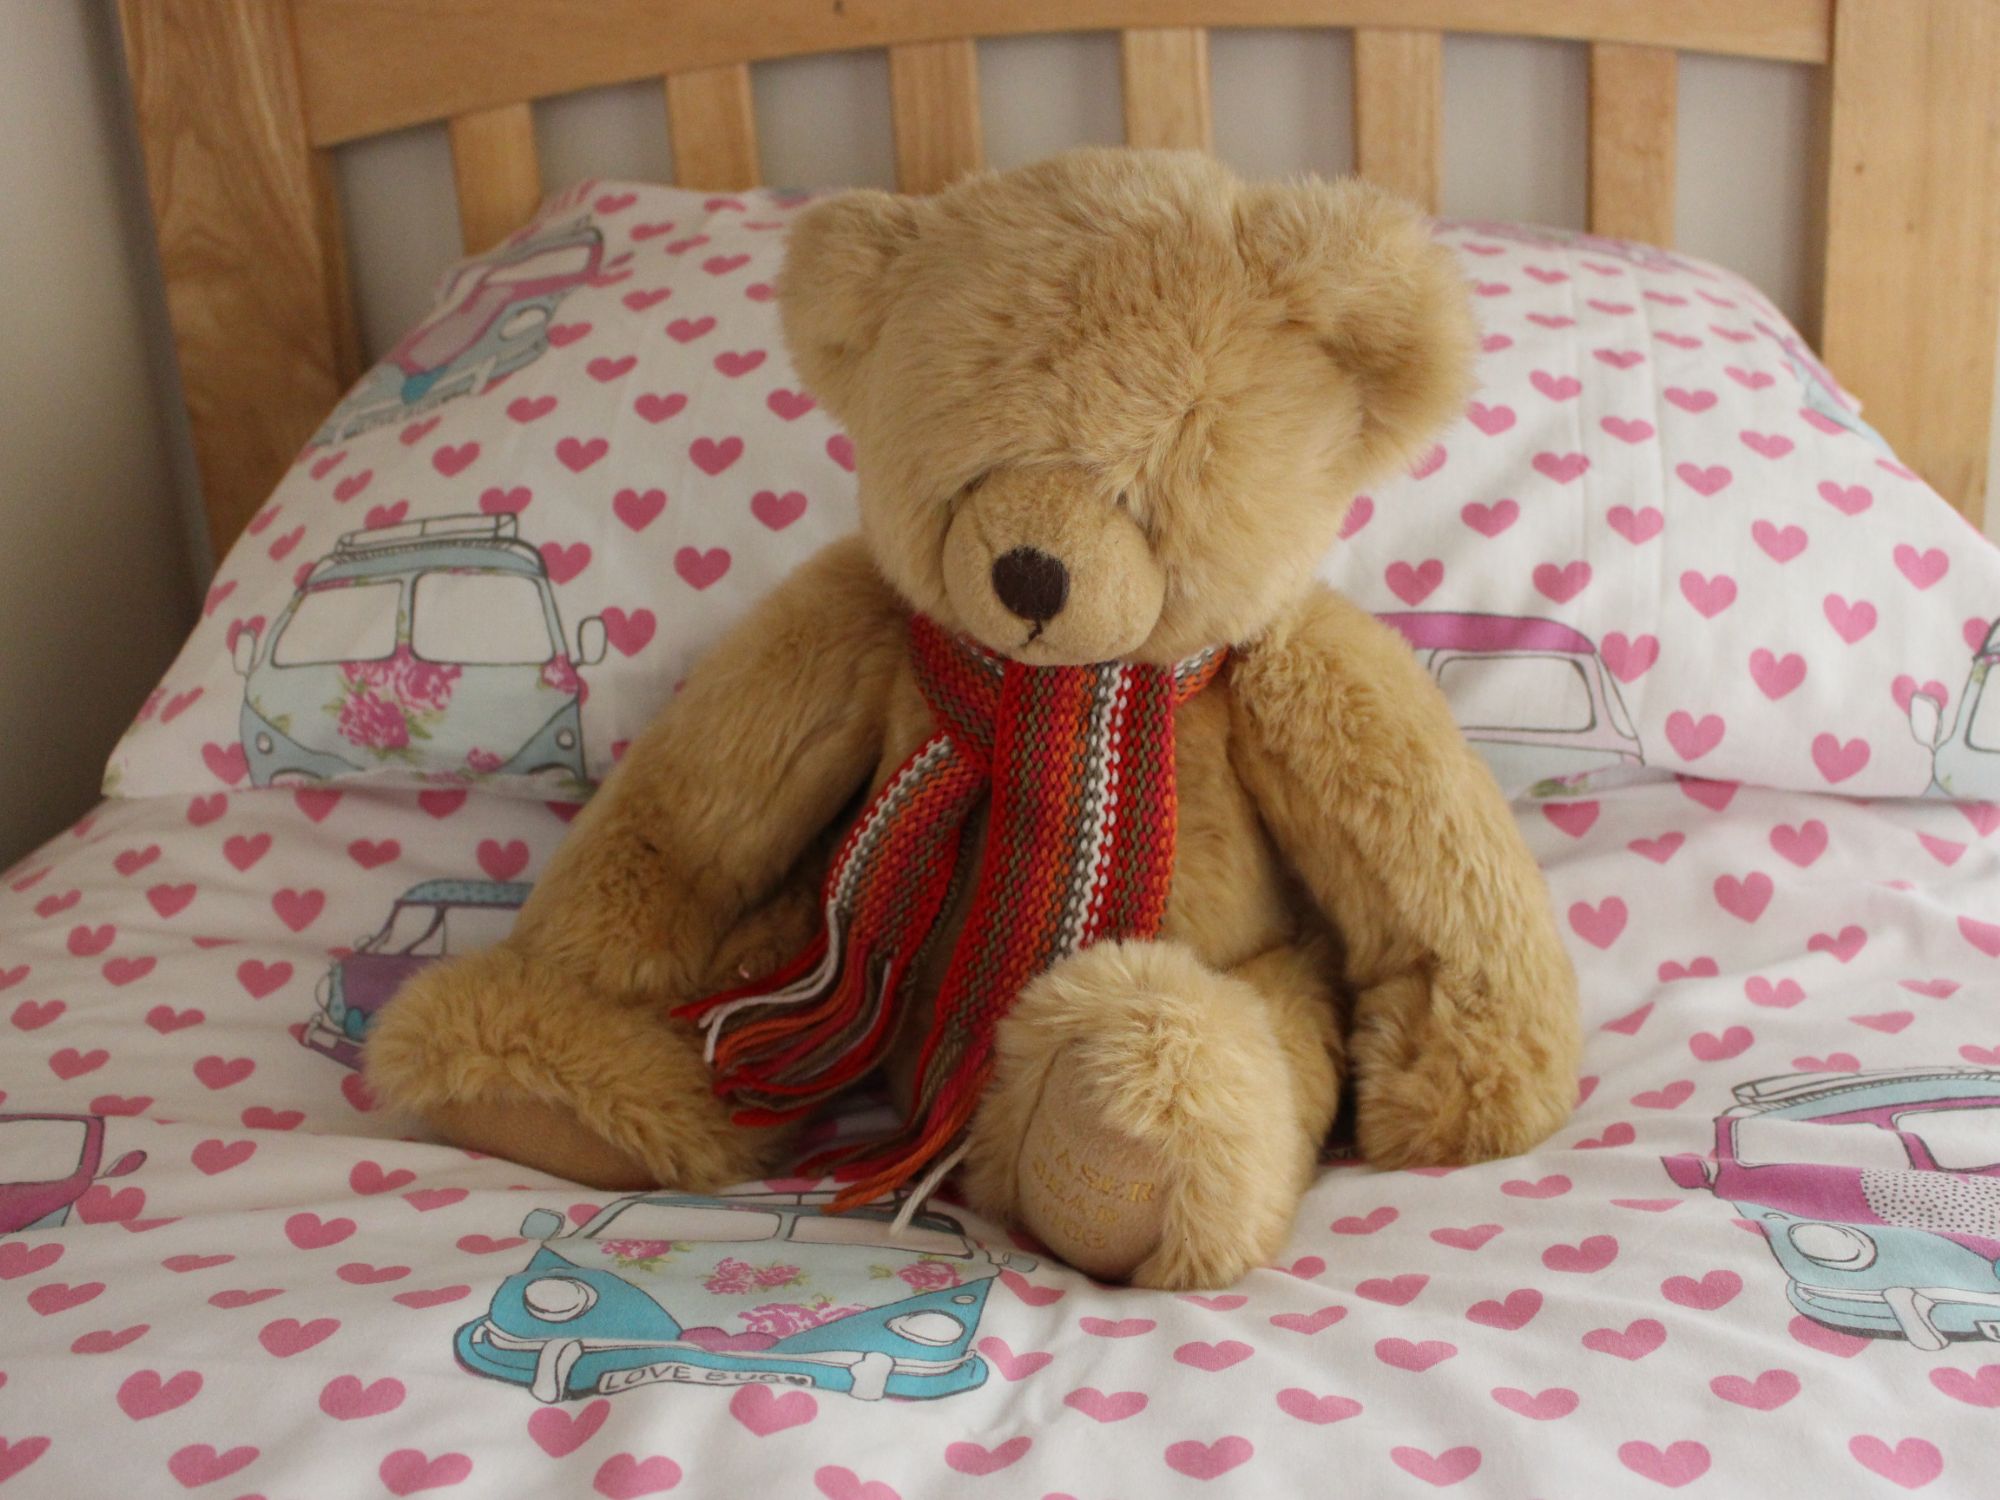 Teddy bear toy on bed